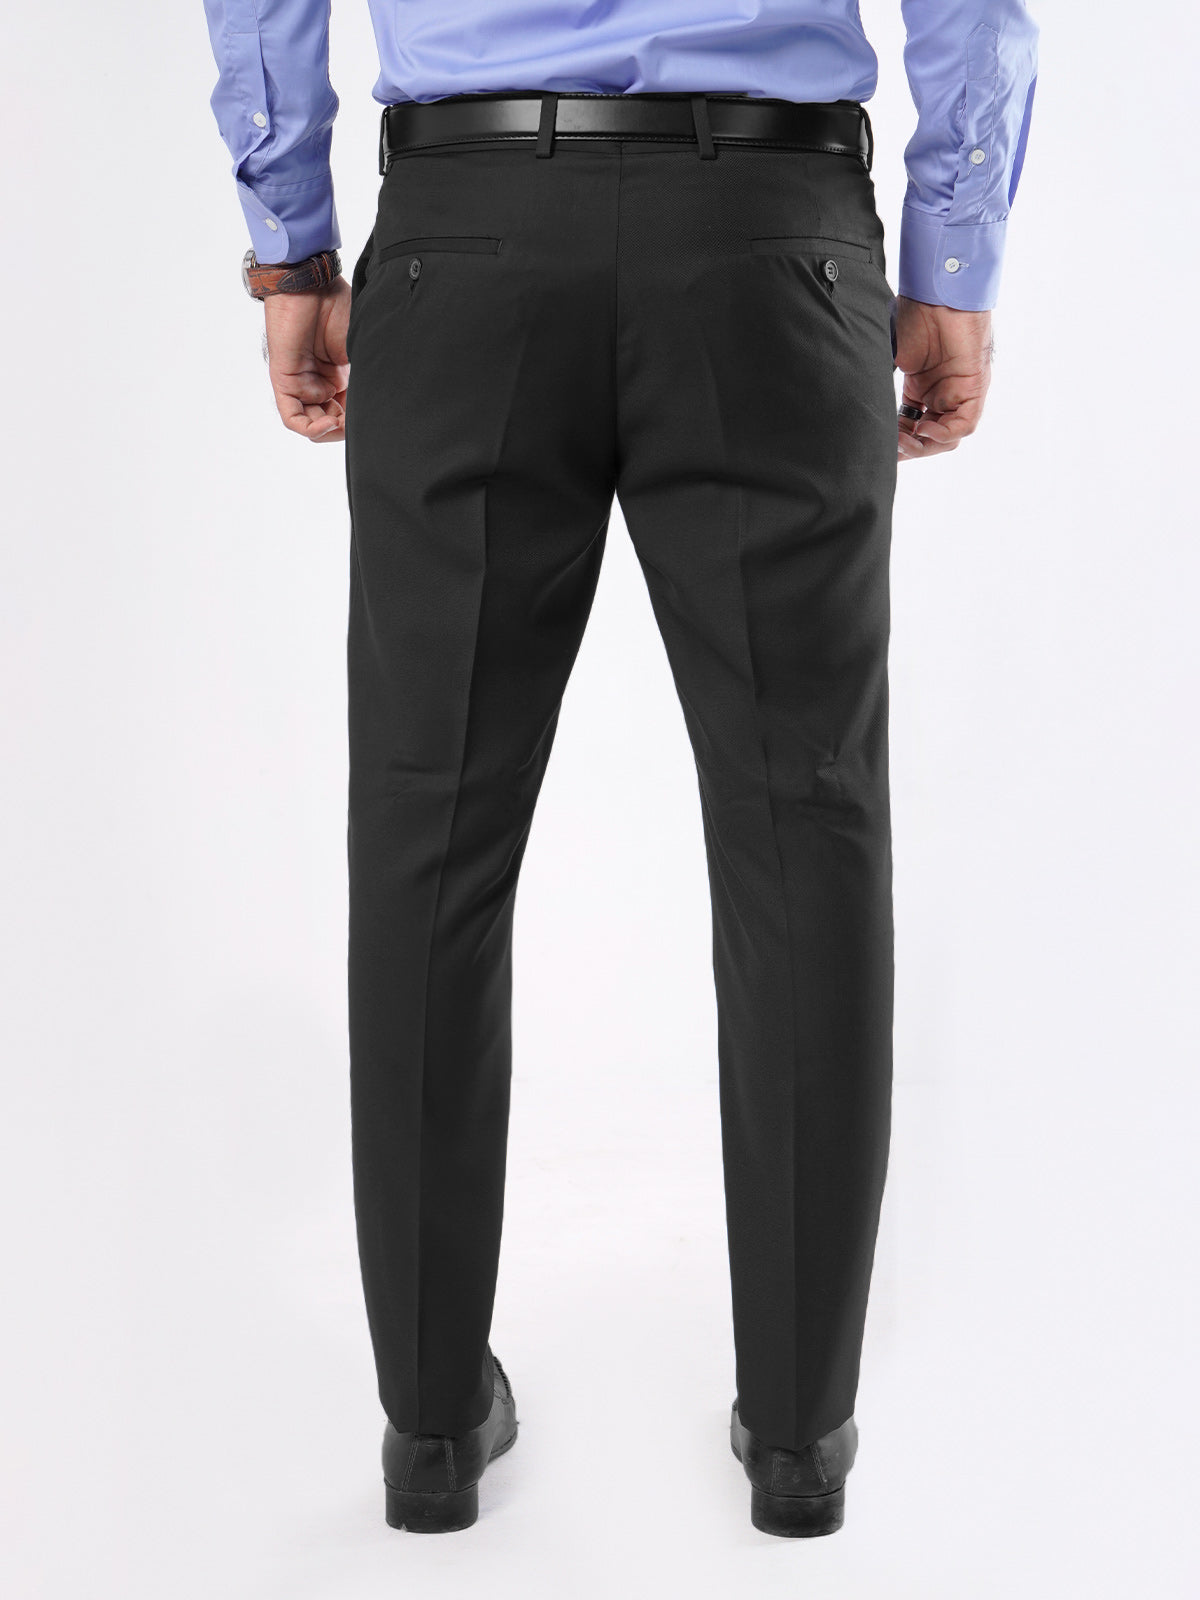 Black Plain Executive Formal Dress Trouser (FDT-111)